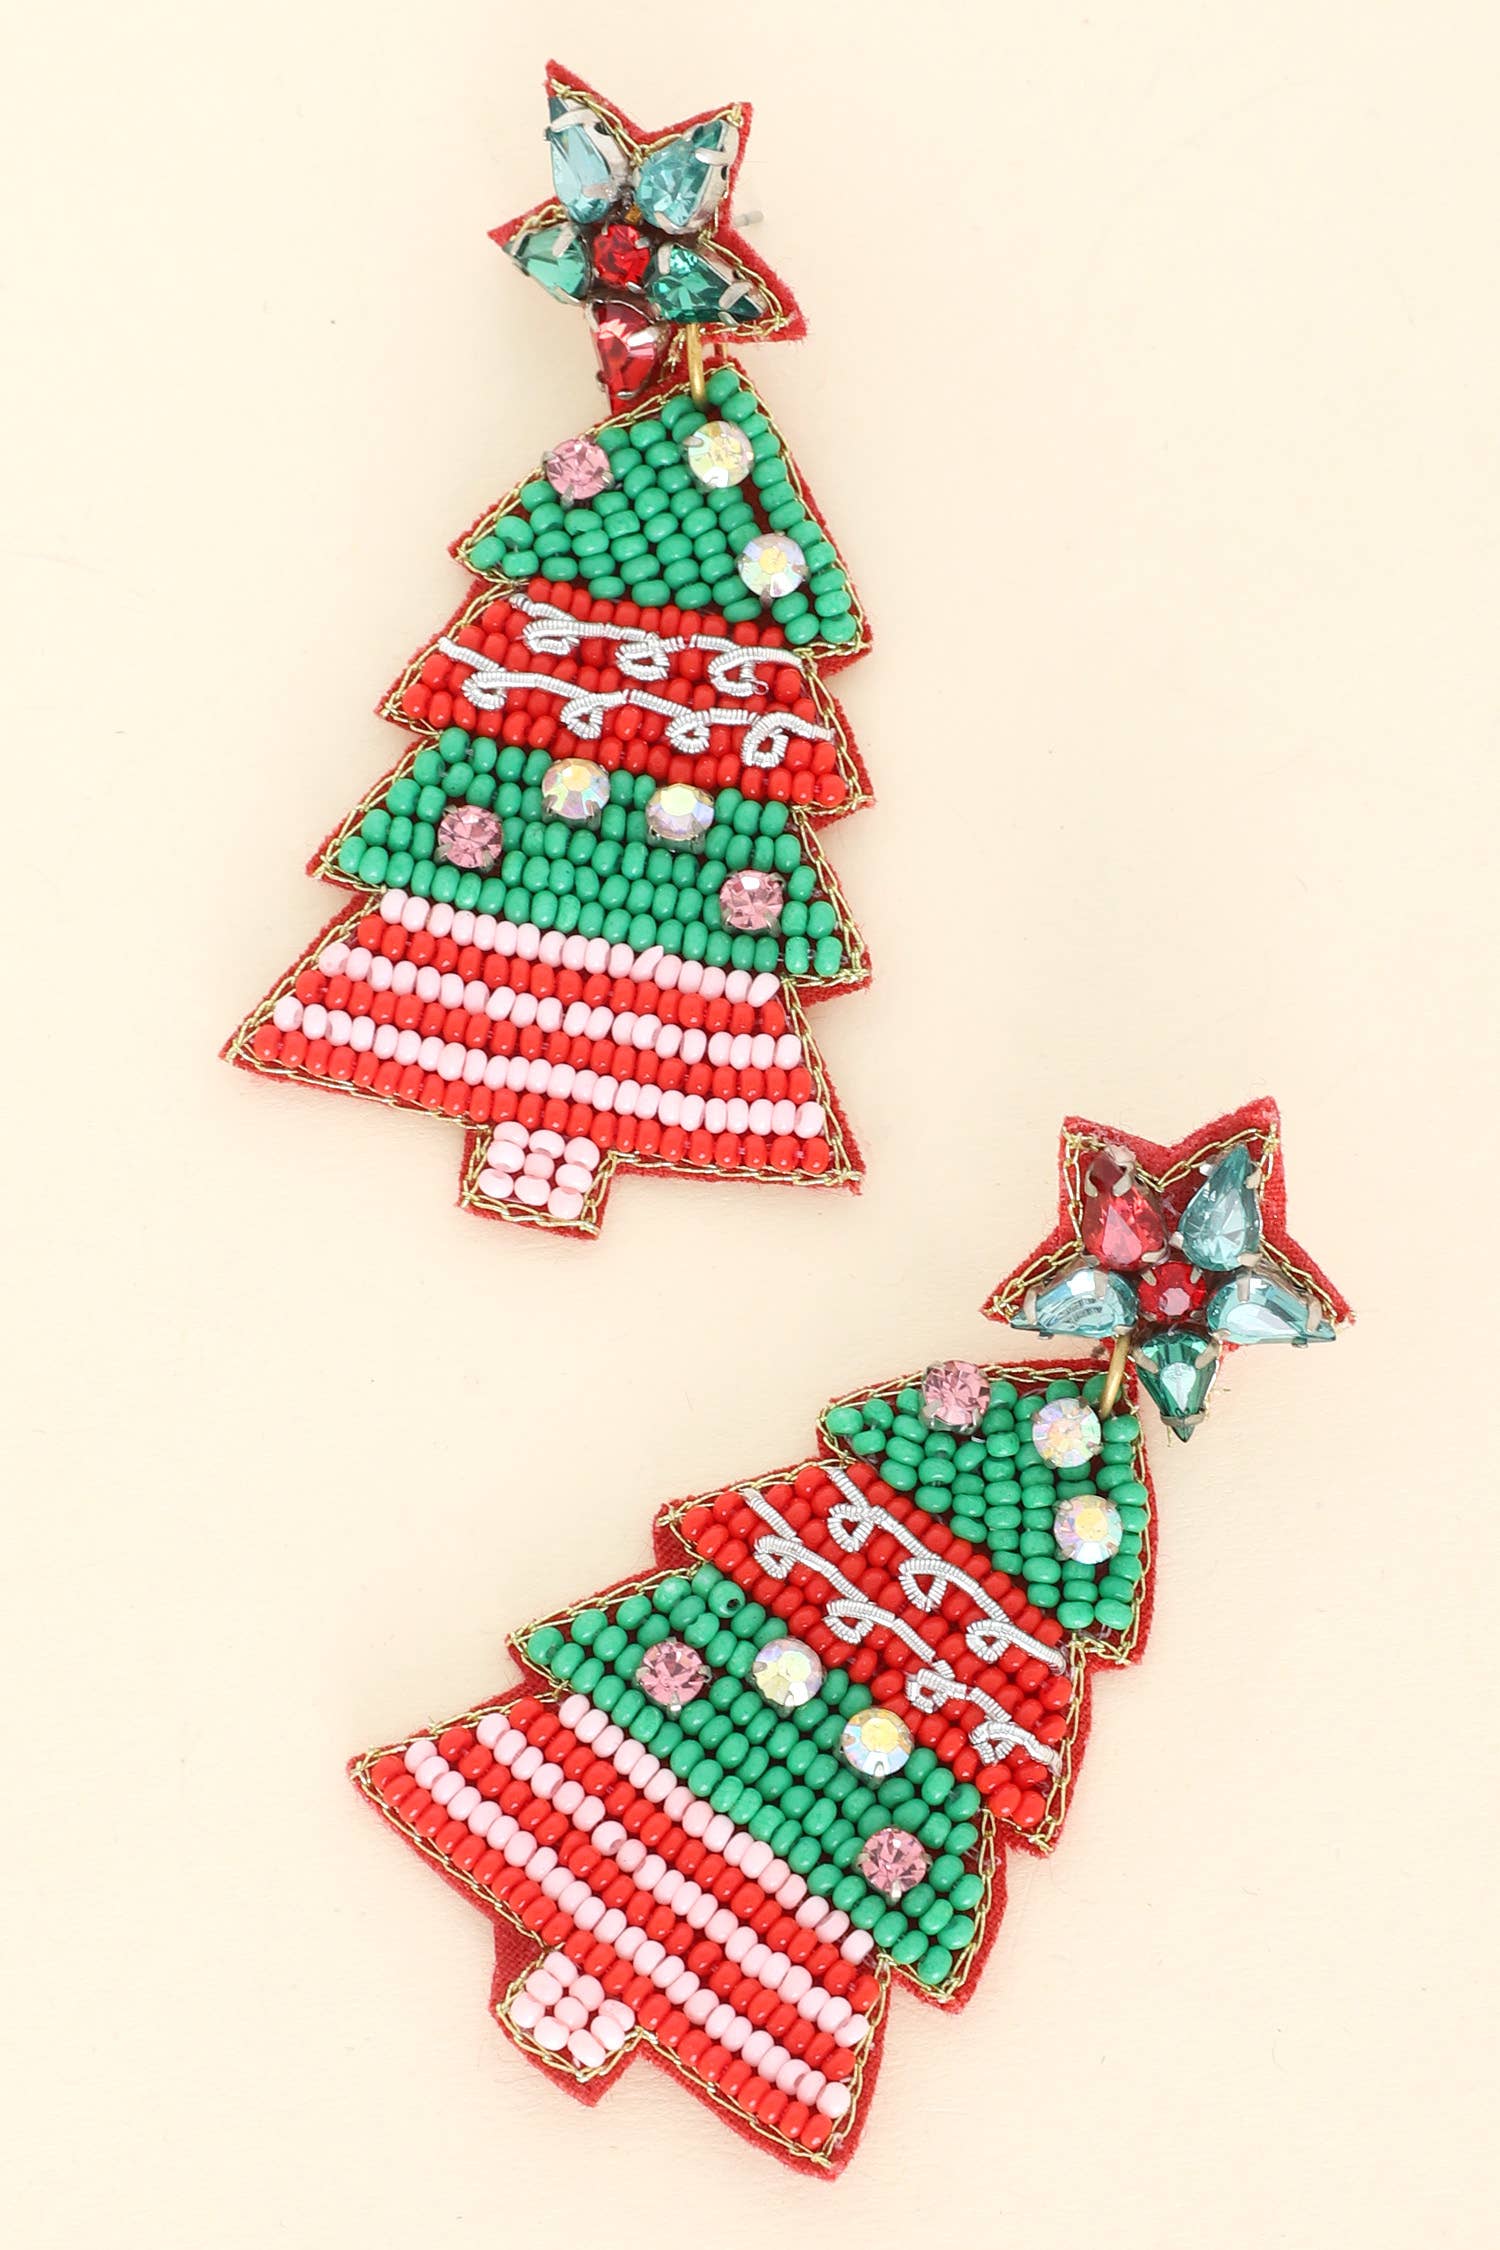 Jeweled Layered Christmas Tree Beaded Earrings - Pretty Crafty Lady Shop